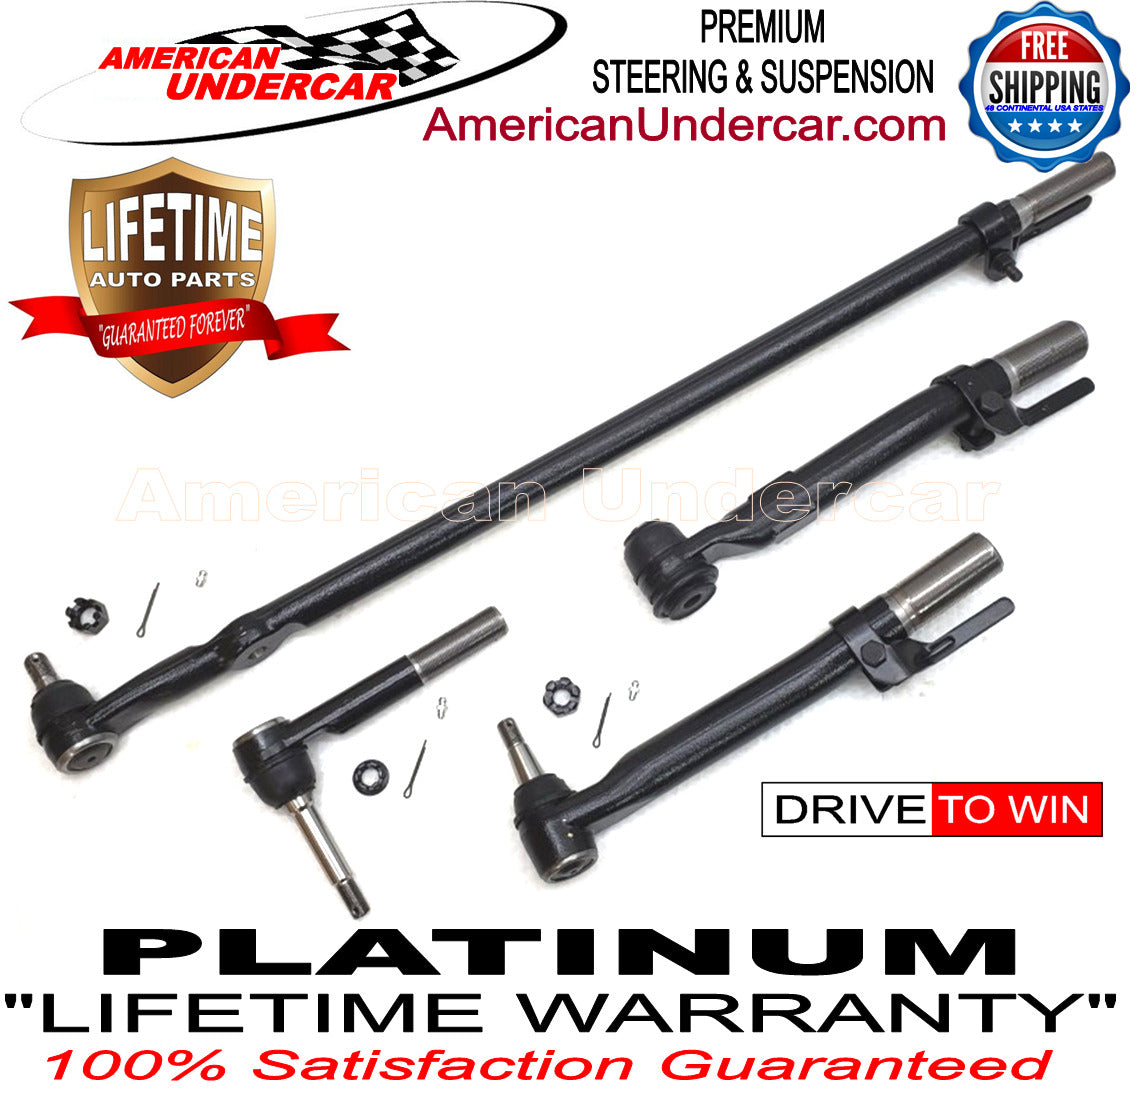 Lifetime Drag Link Tie Rod Steering Kit for 2005-2010 Ford F450, F550 Super Duty 2WD